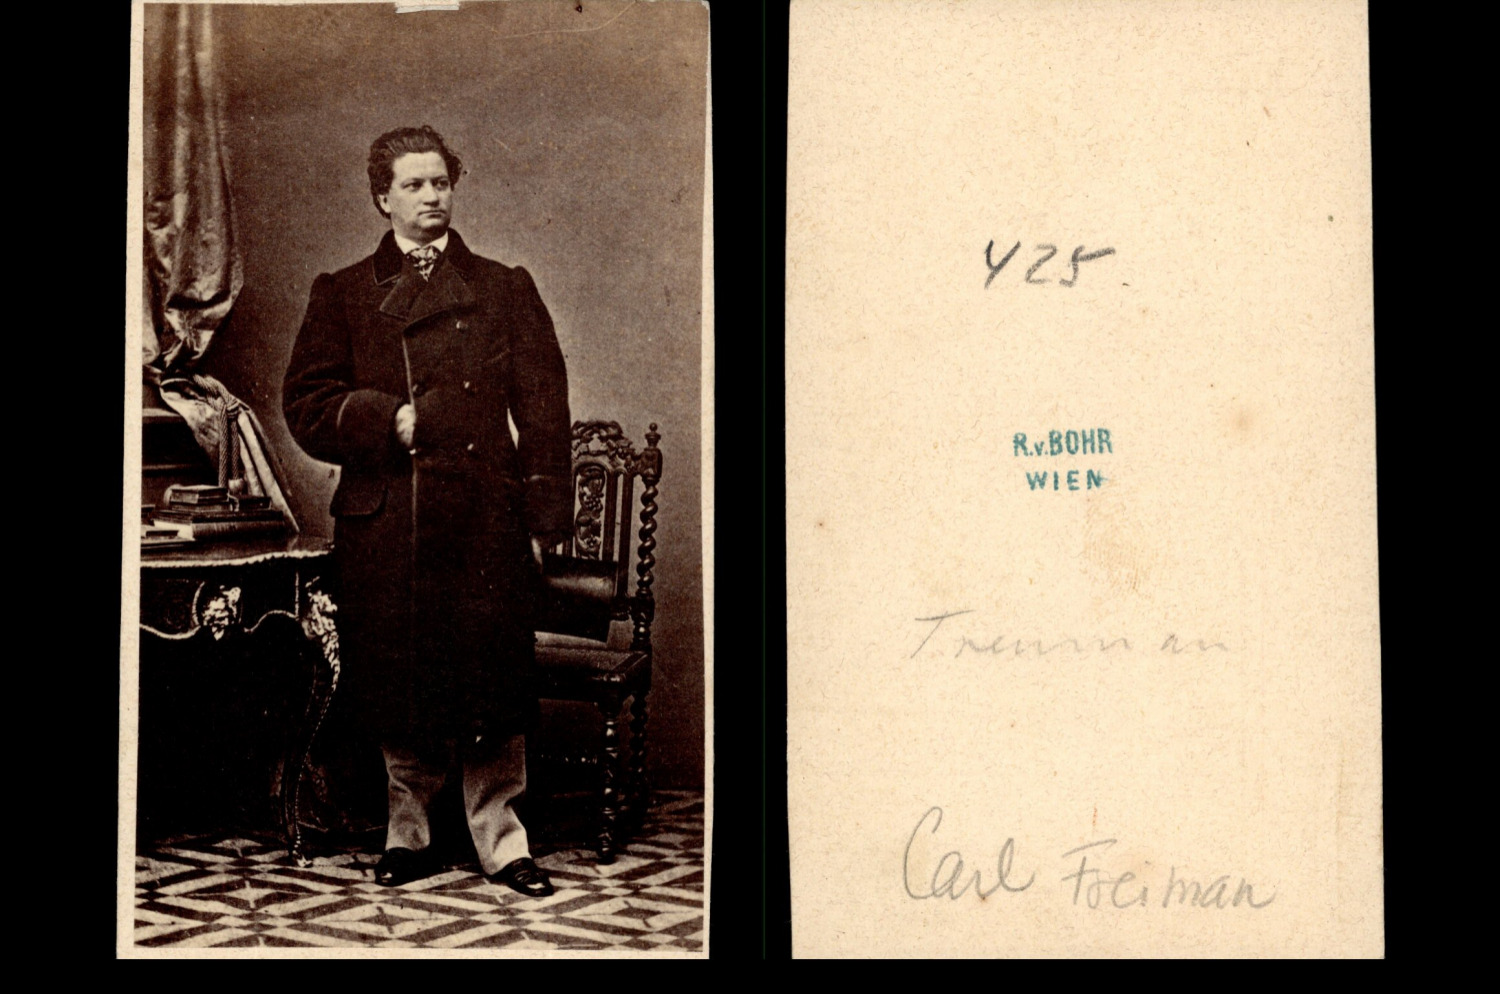 Bohr, Vienna, Carl Freiman Vintage Albums Print CDV. Alb Print